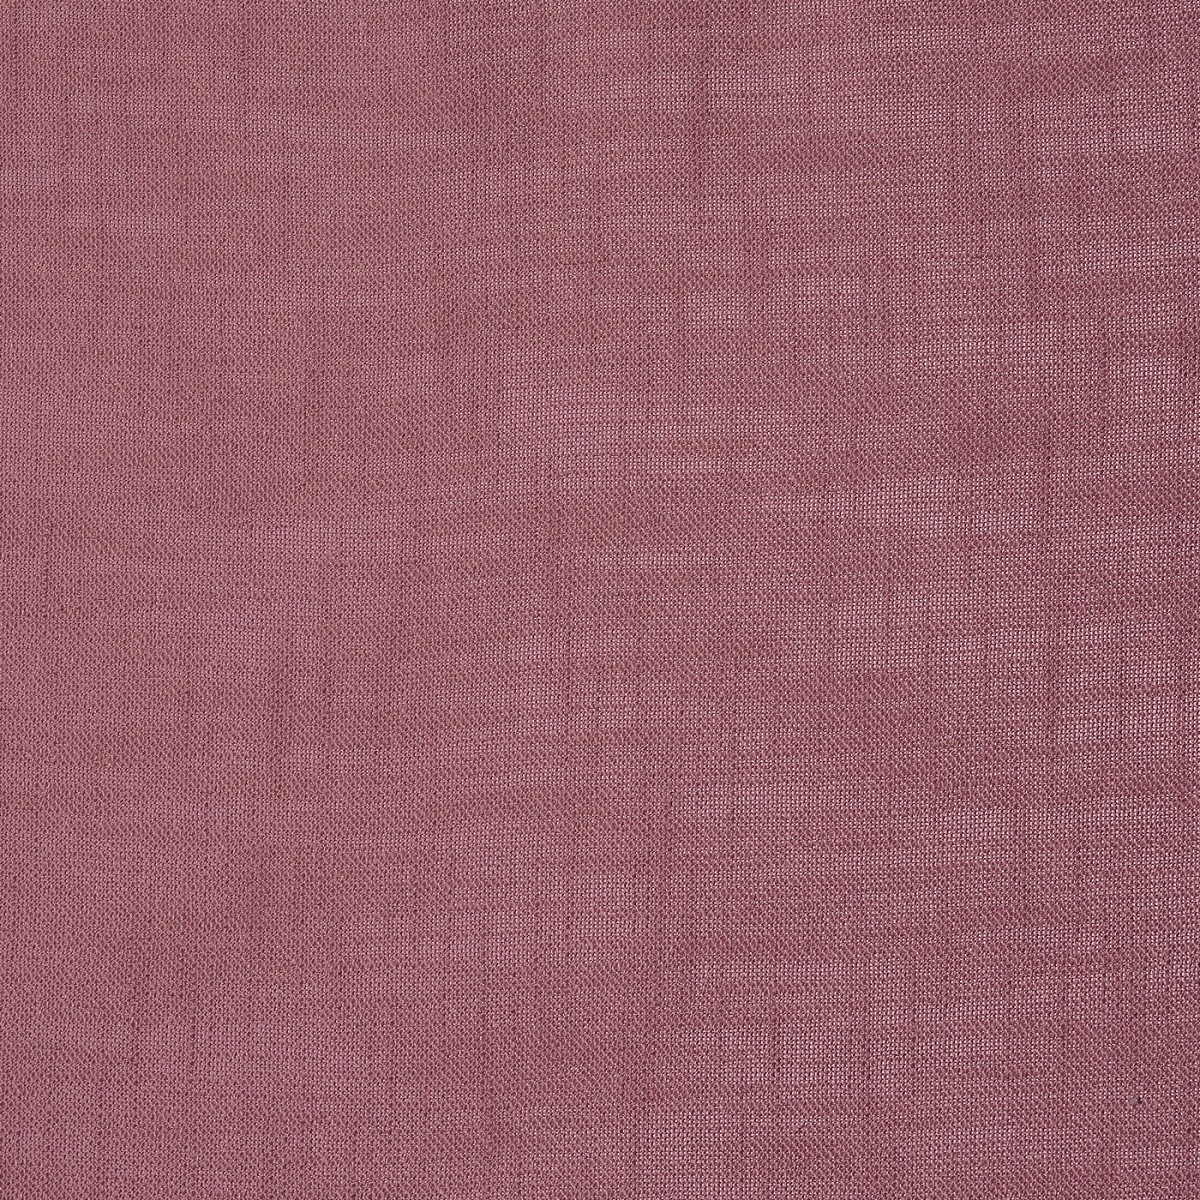 Harmony Mulberry Fabric by Prestigious Textiles